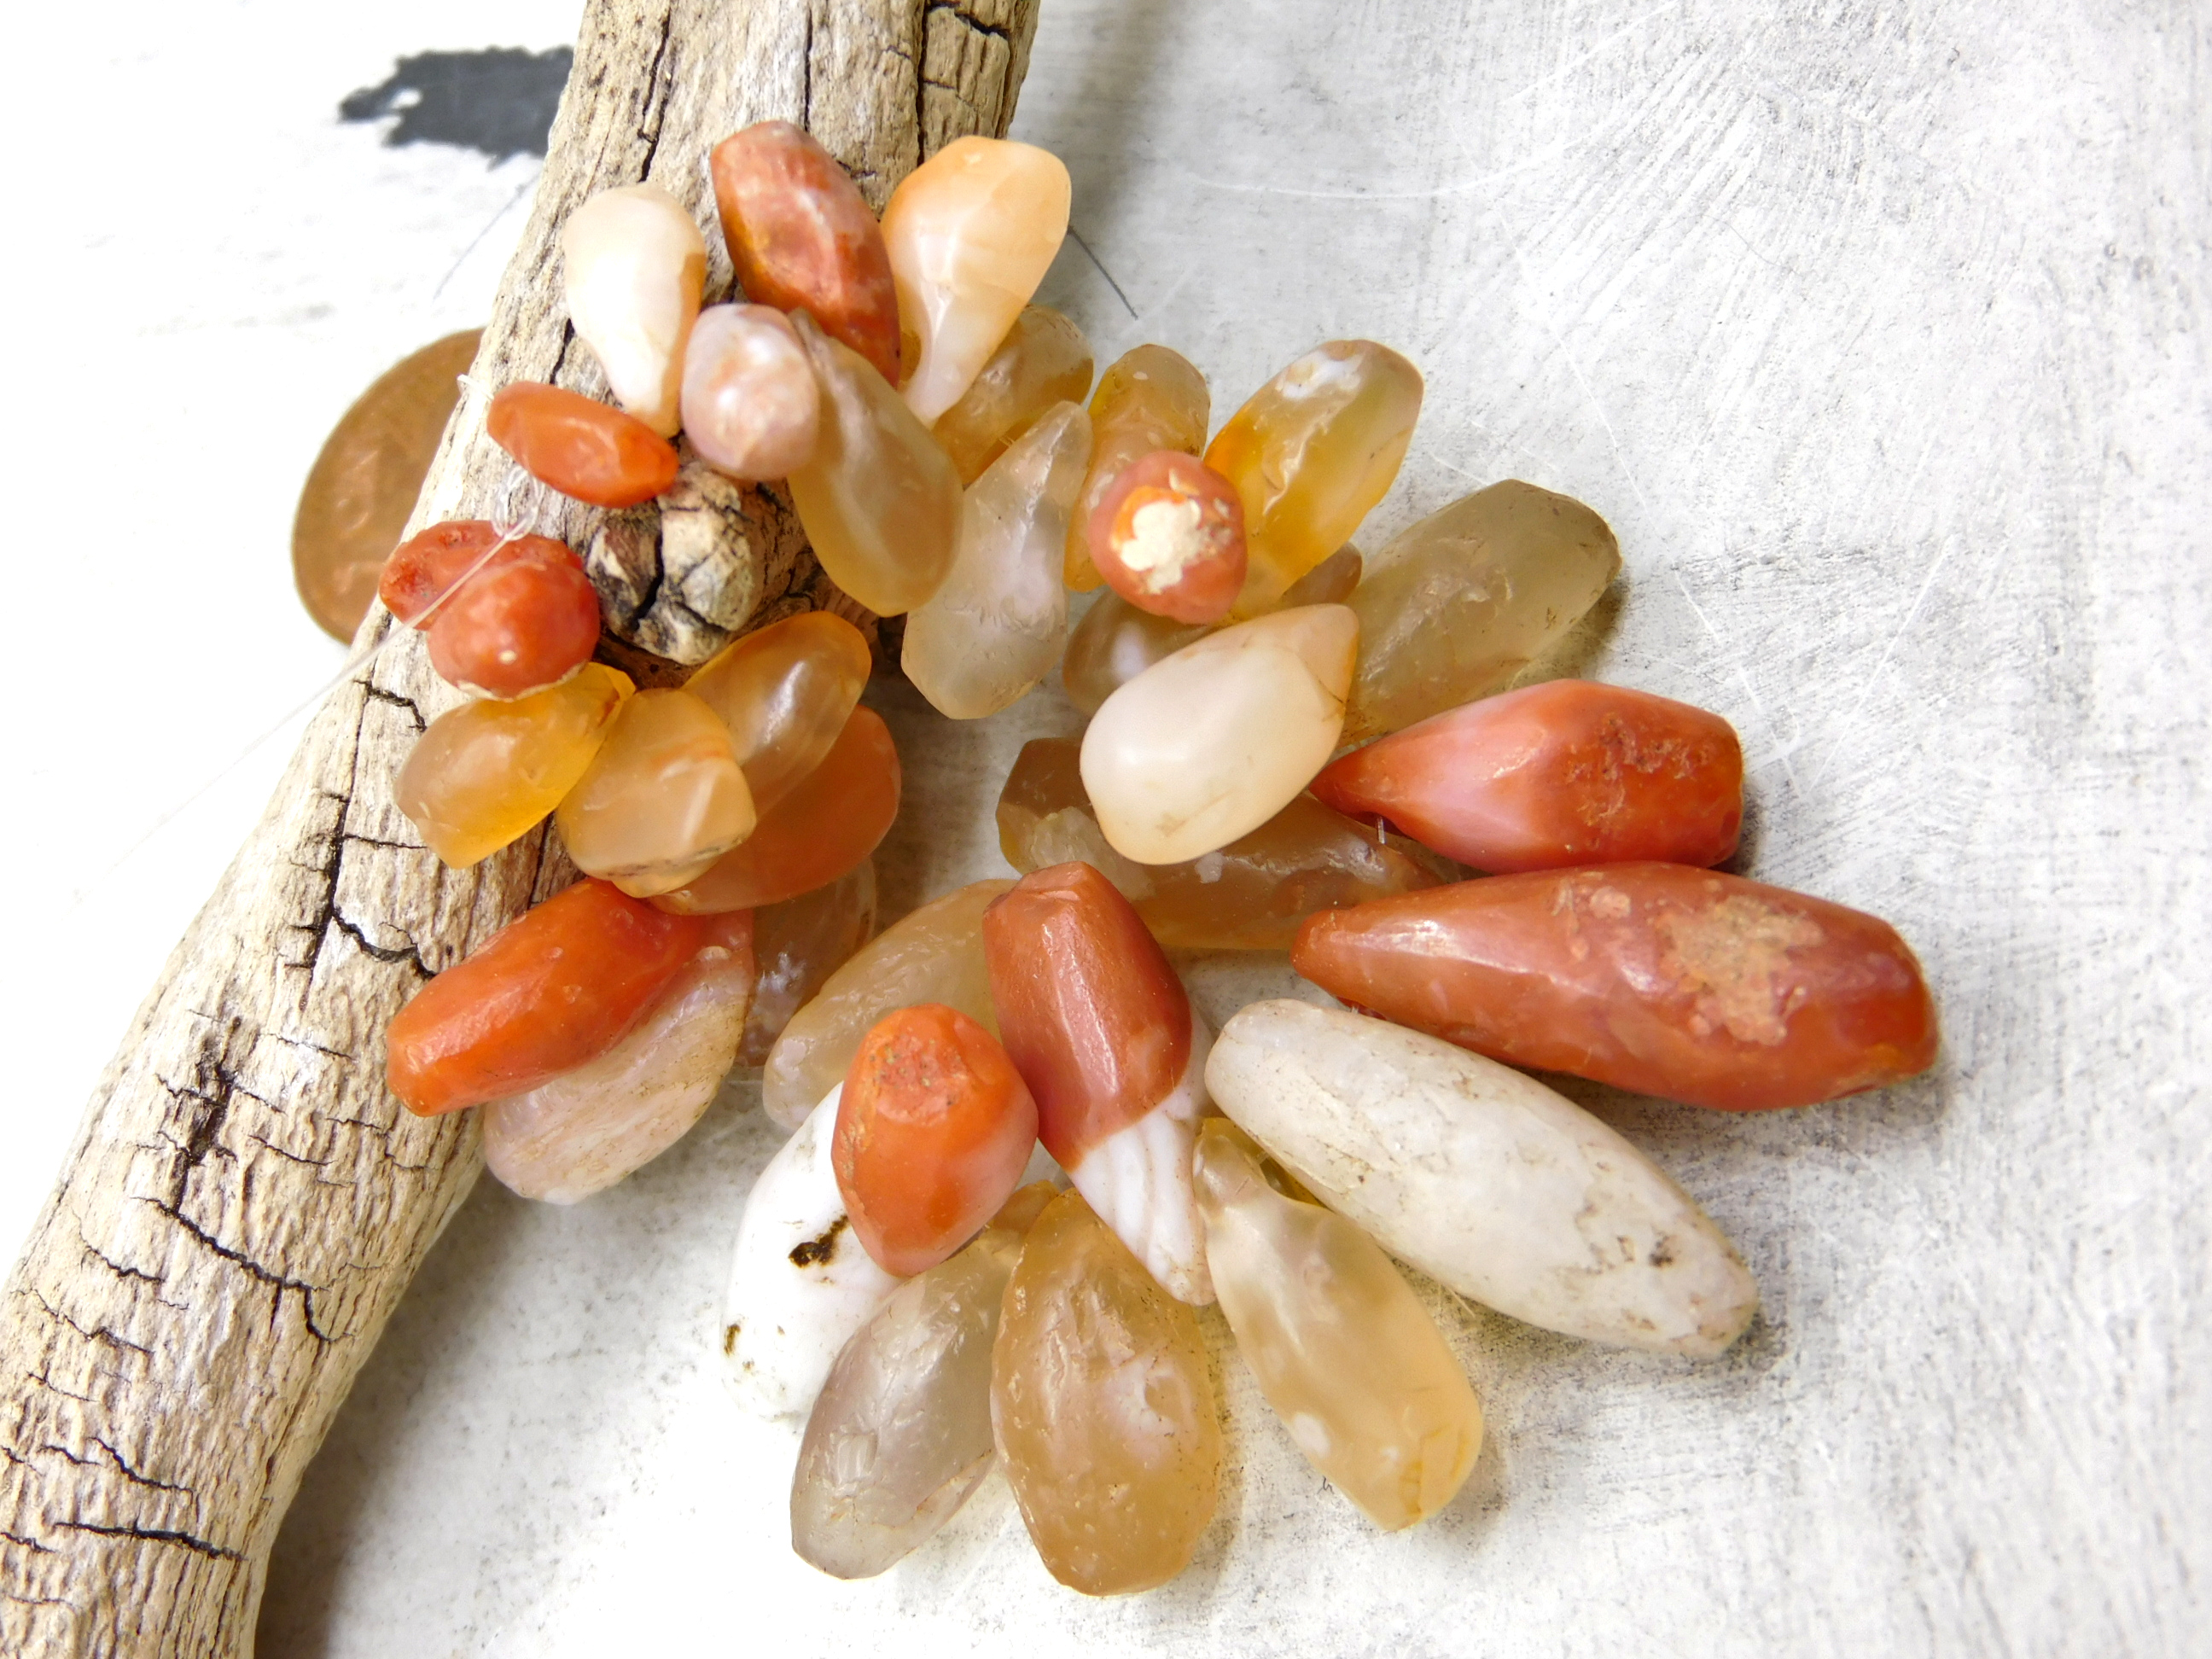 small stone pendants from Sahara desert, very rare, teeth, teardrops - quartz, jasper, agate, carnelian